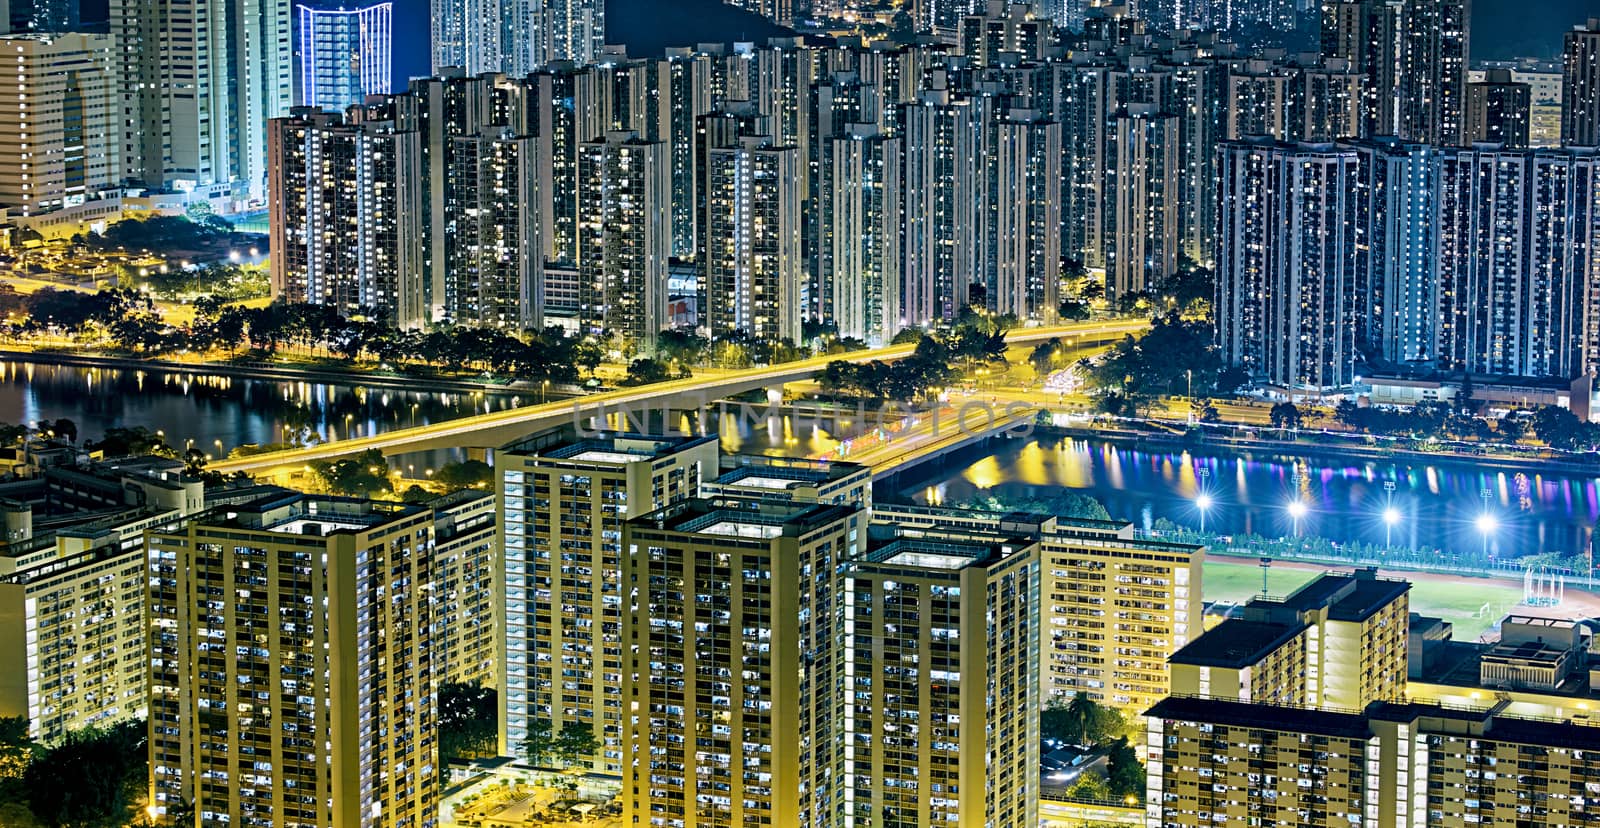 Residential building in Hong Kong at night